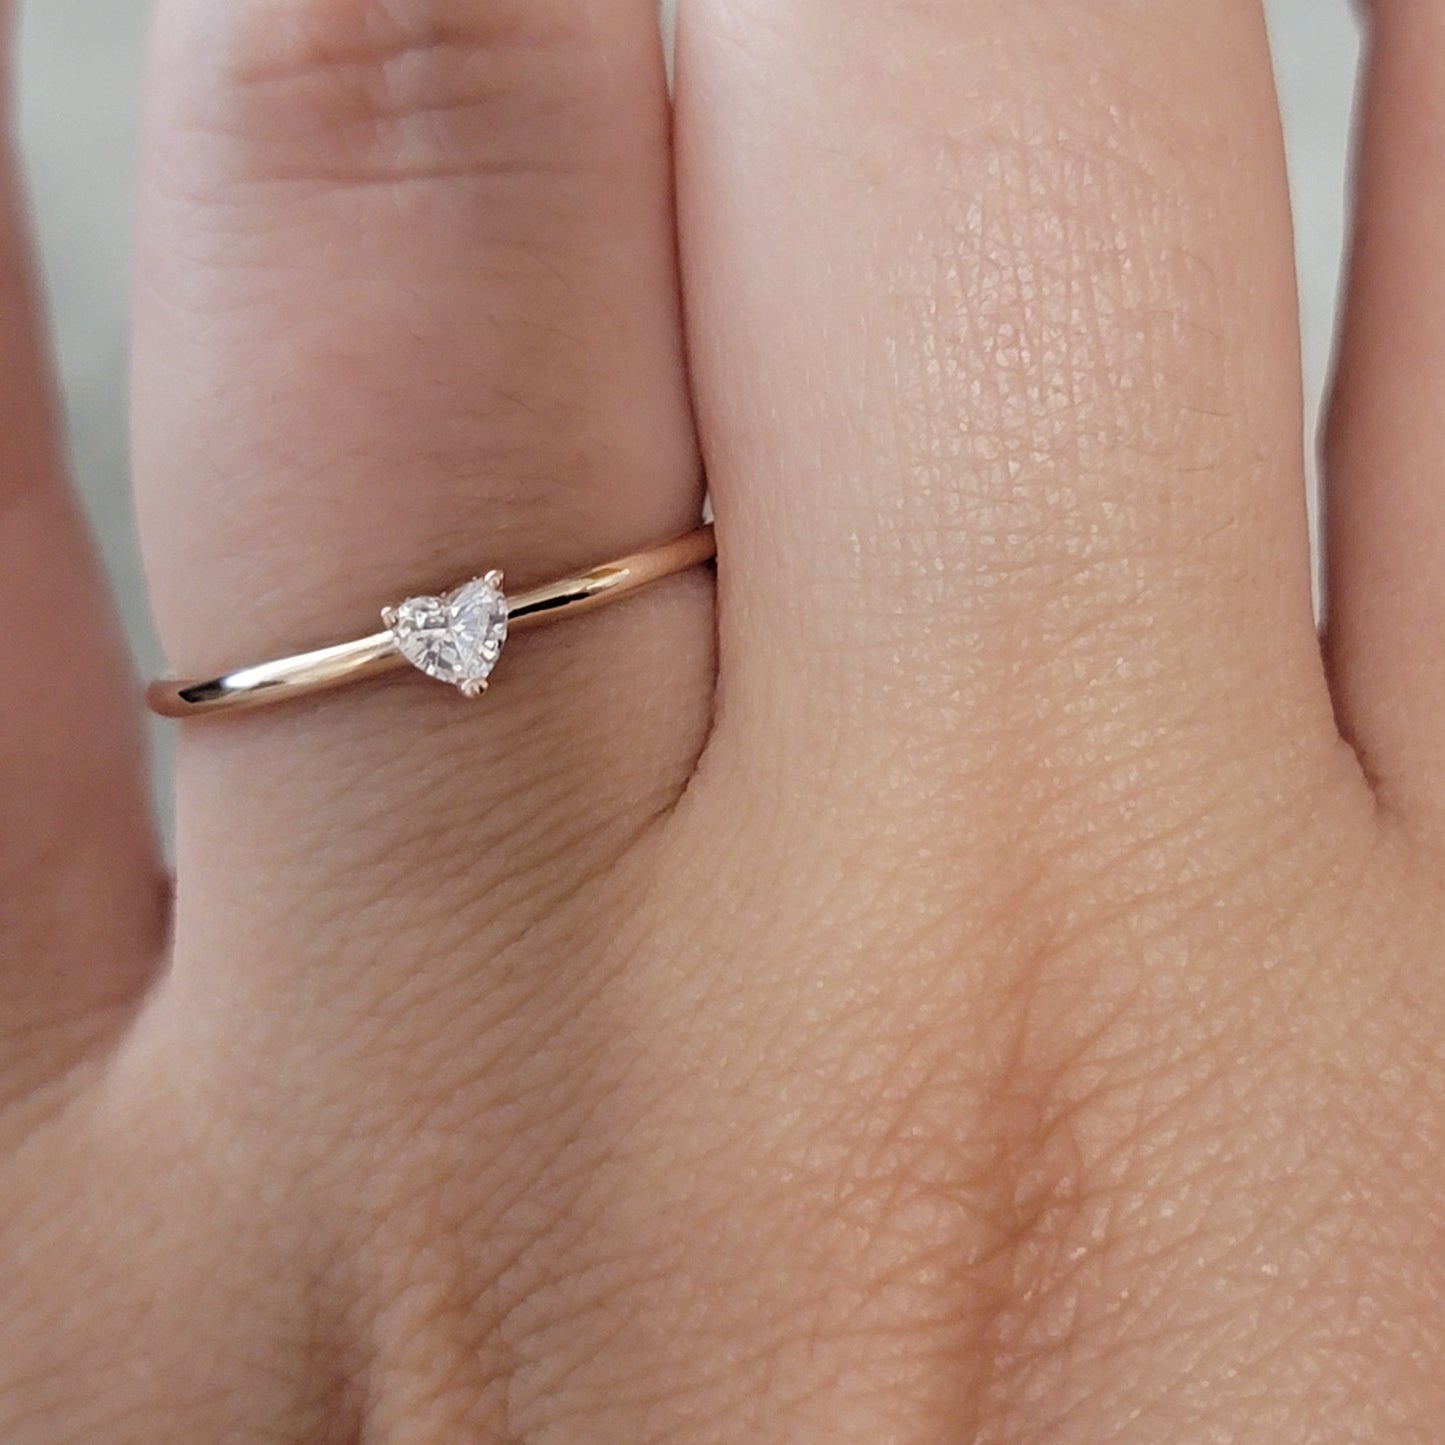 Diamond Solitaire Ring, Heart-Shape Diamond Ring, Wedding Ring, Dainty Wedding Band Promise Ring, 14K Gold Ring, White, Rose, Gift For Her